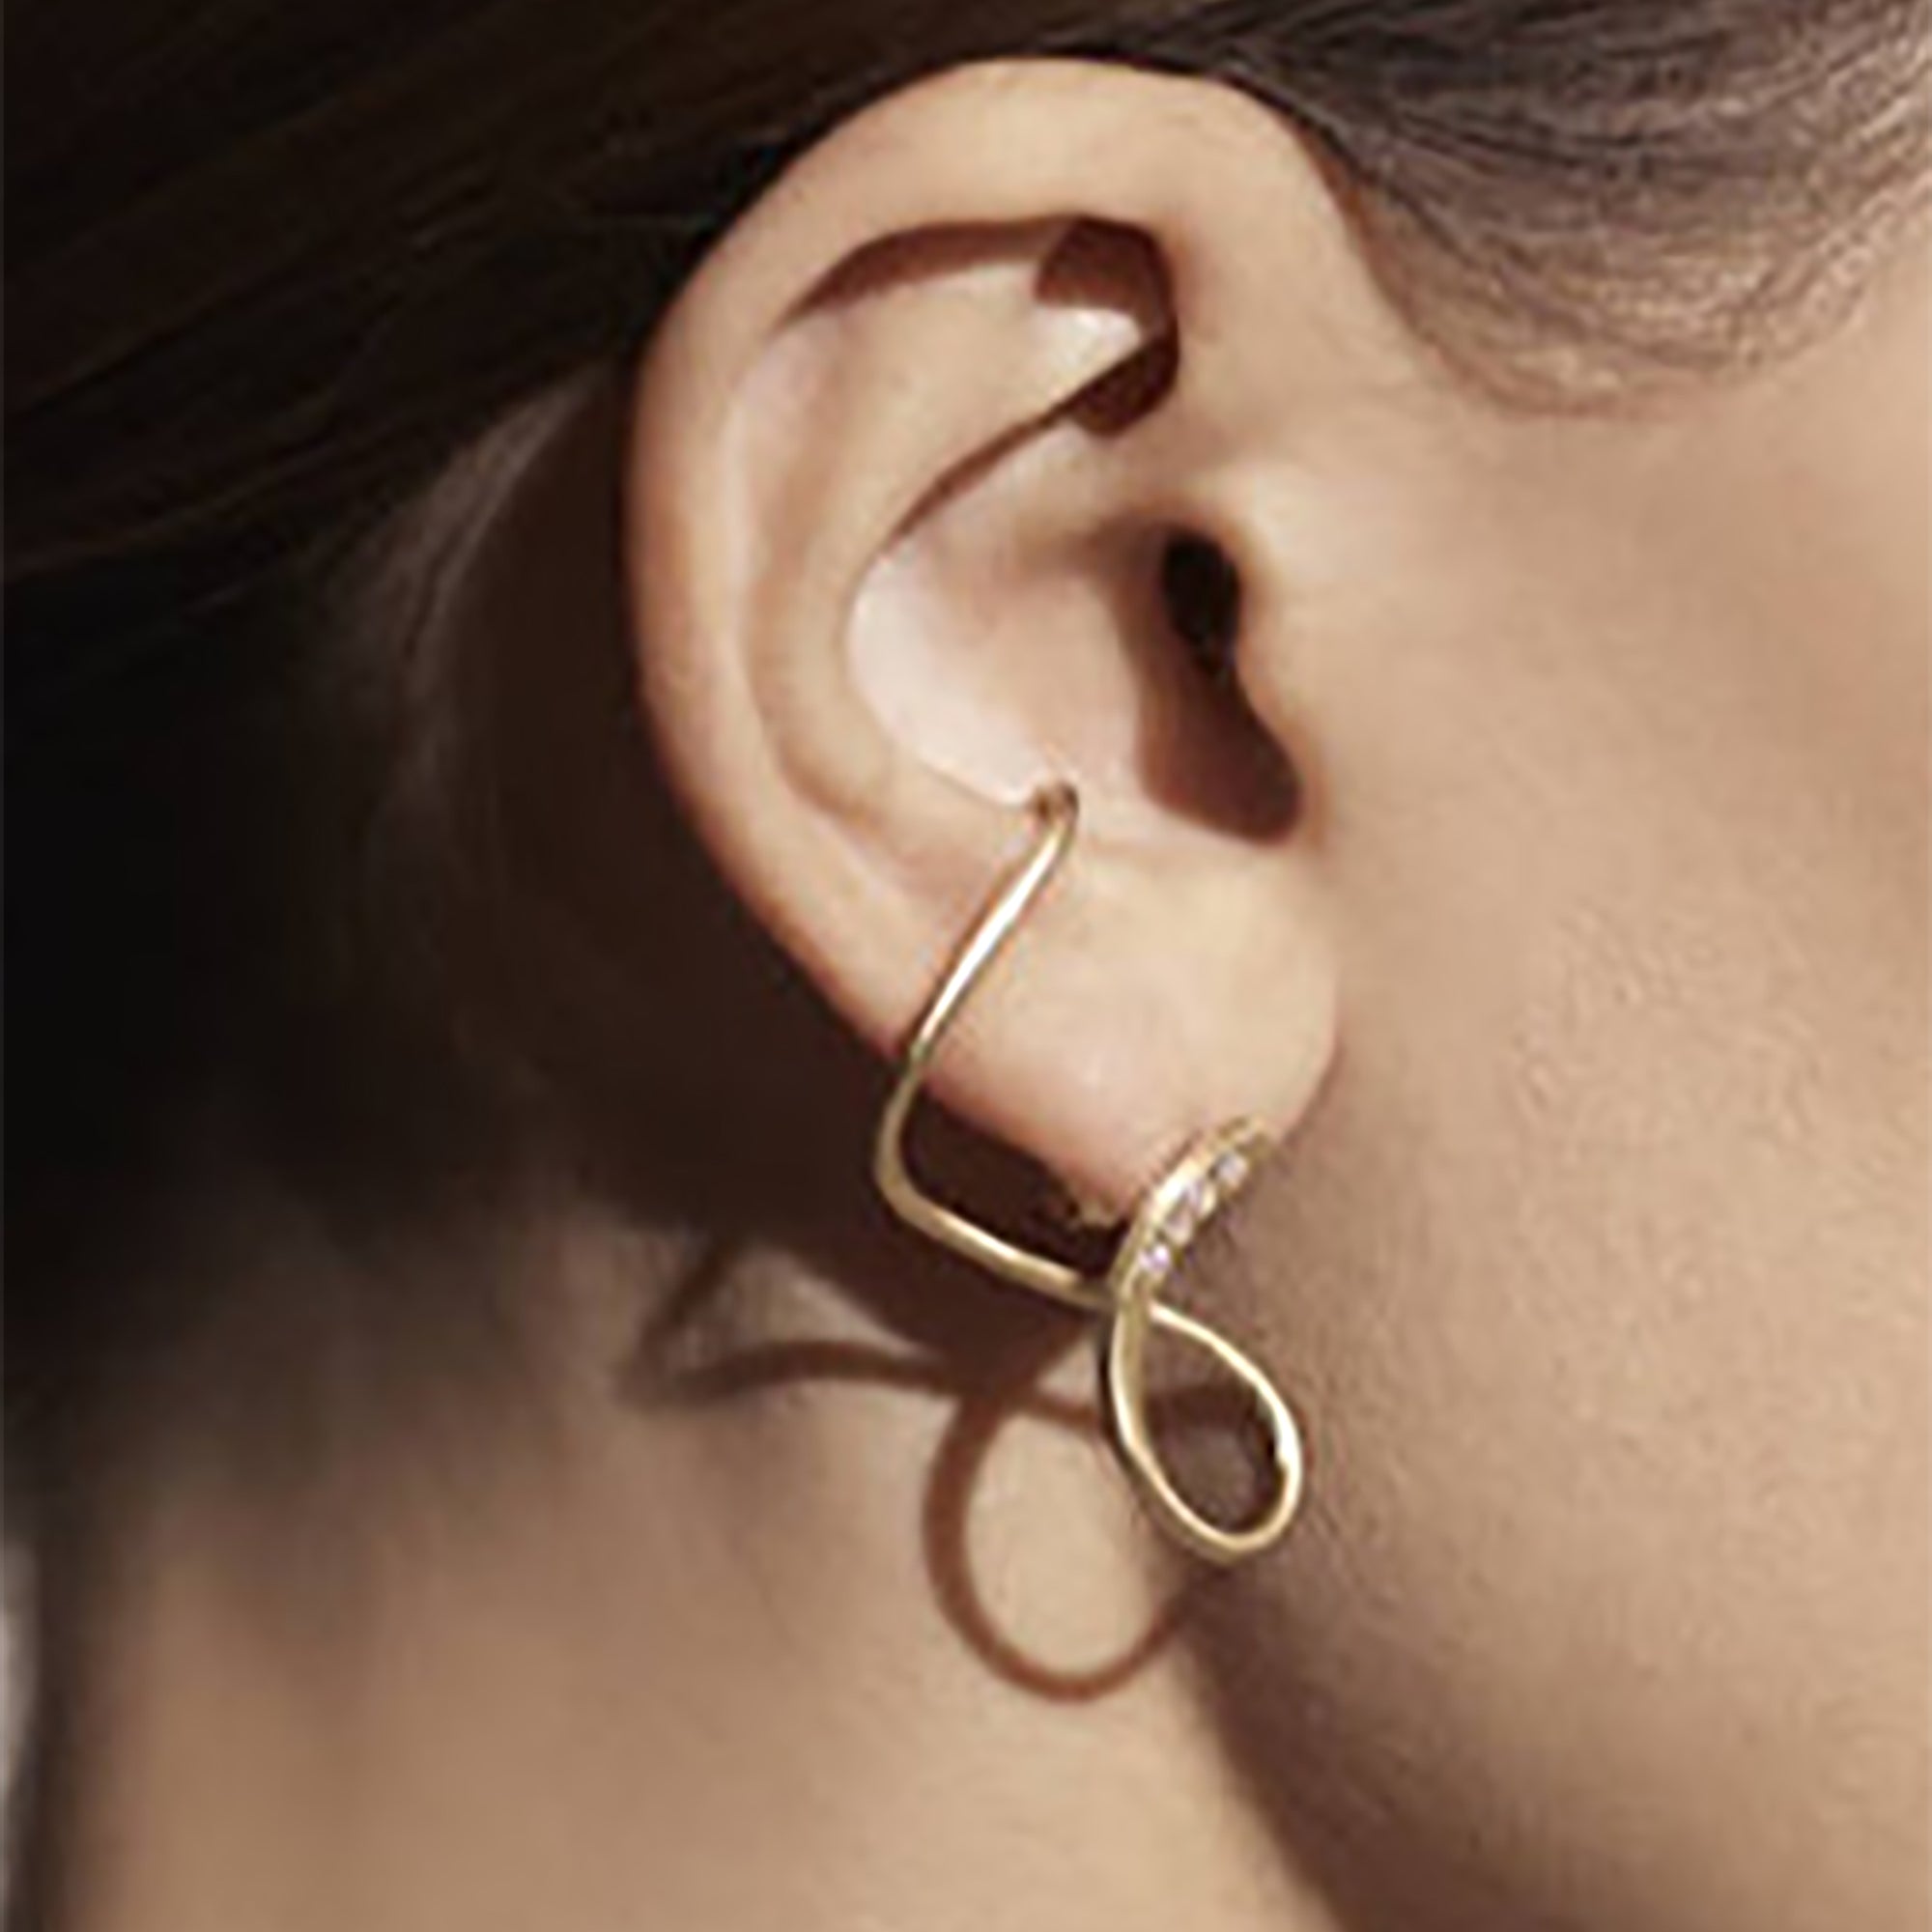 18K Gold Plated w/ CZ Deco Design Suspender Earrings wedding gift KOL influencer birthday